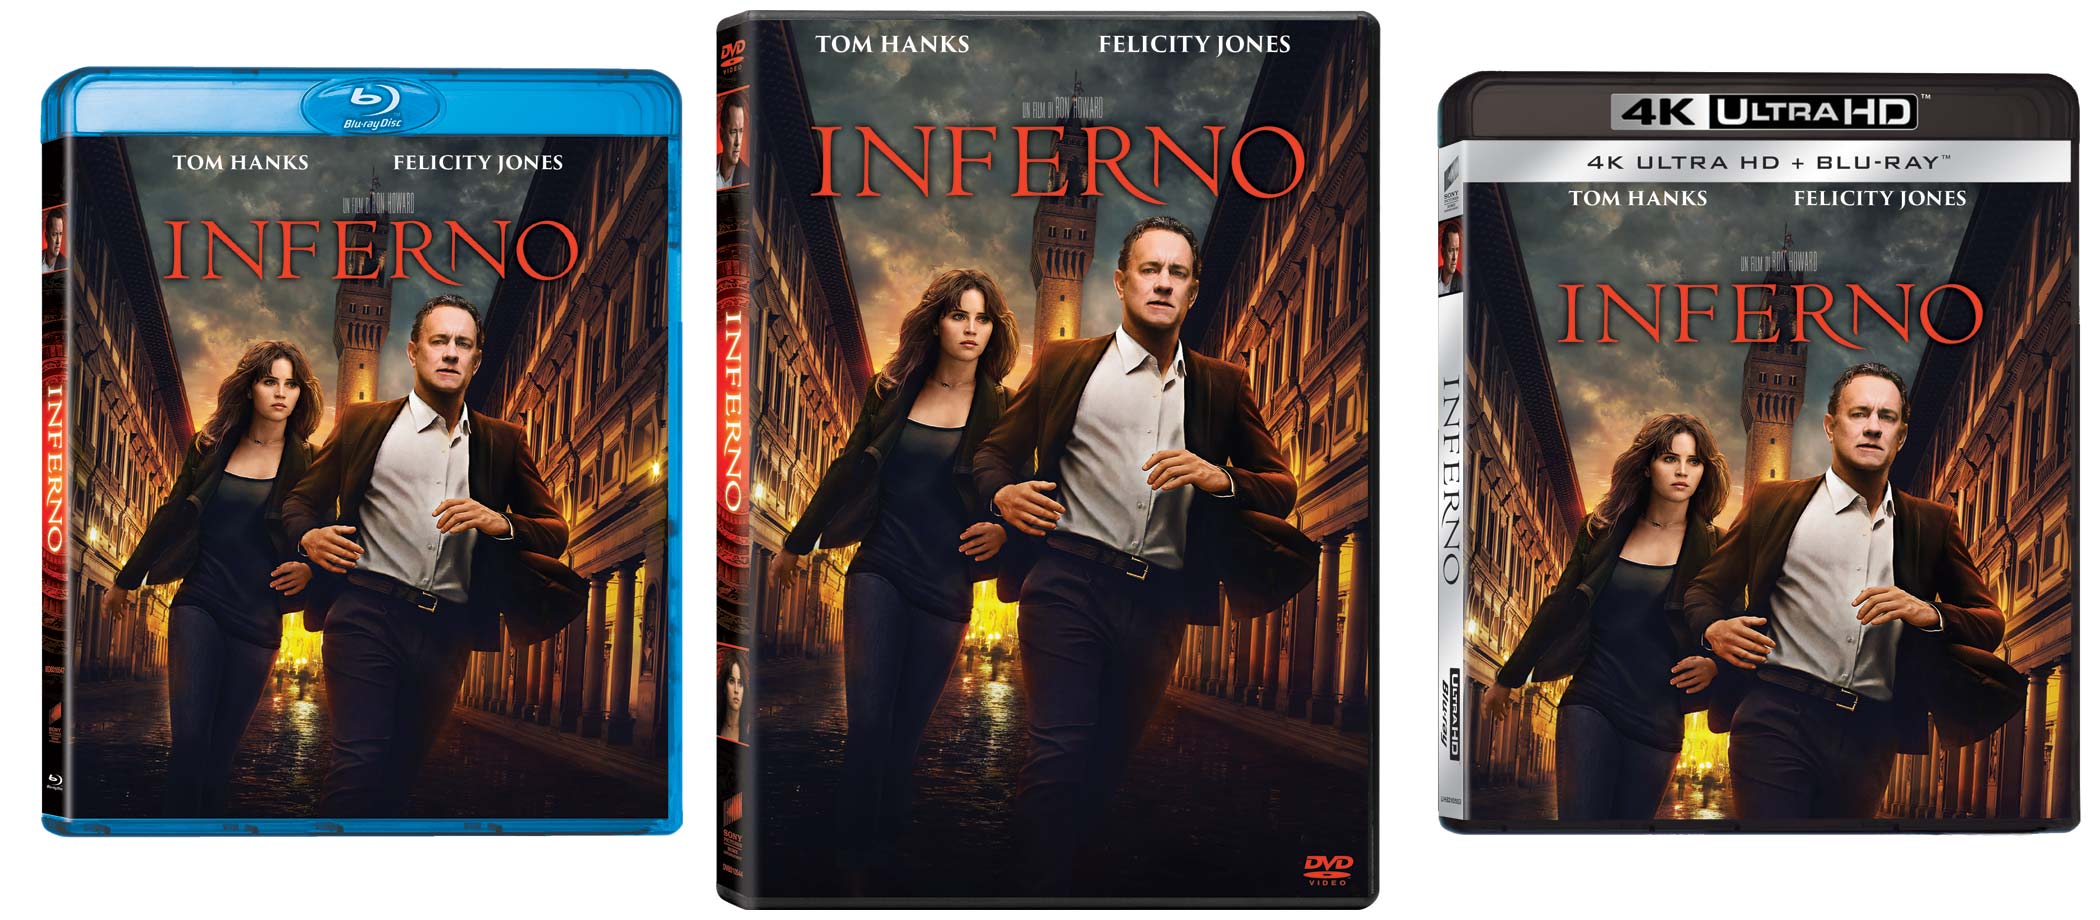 Inferno con Tom Hanks in DVD, Blu-ray, 4k UHD